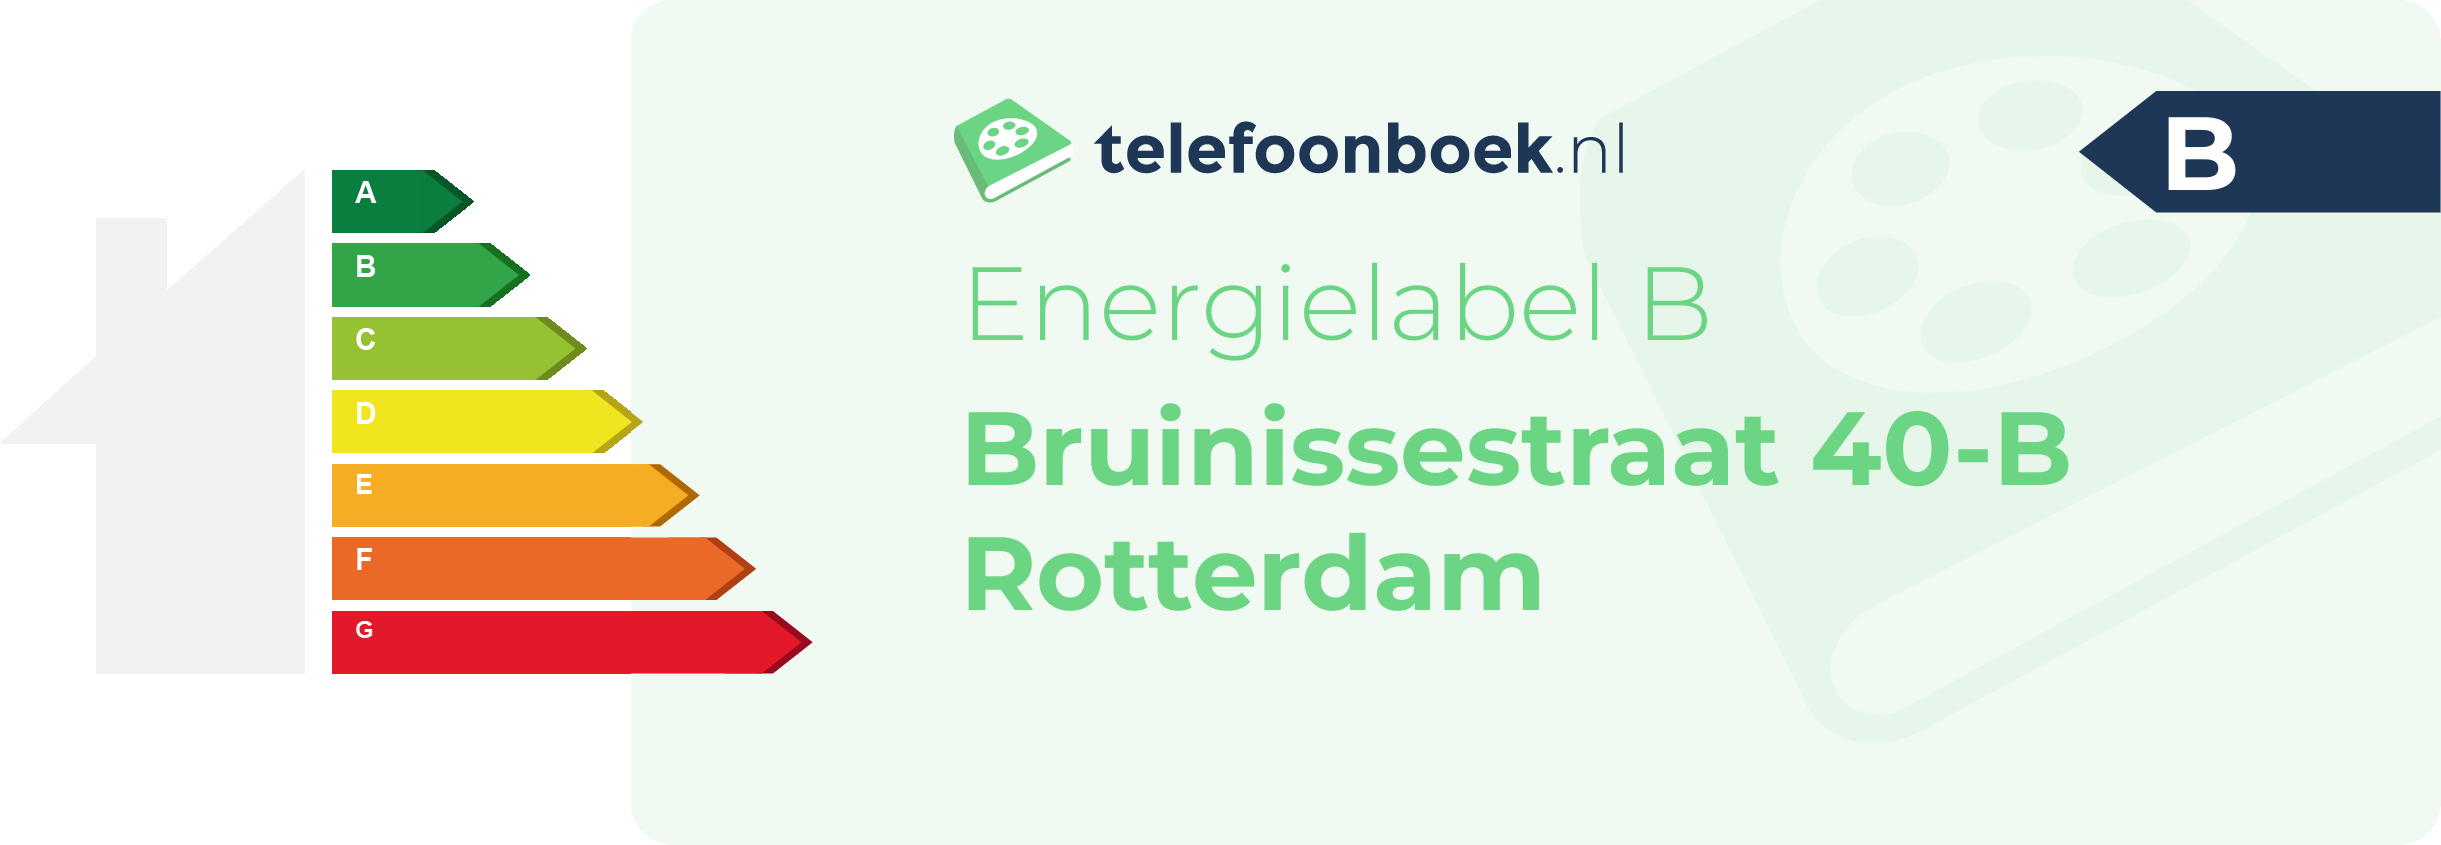 Energielabel Bruinissestraat 40-B Rotterdam